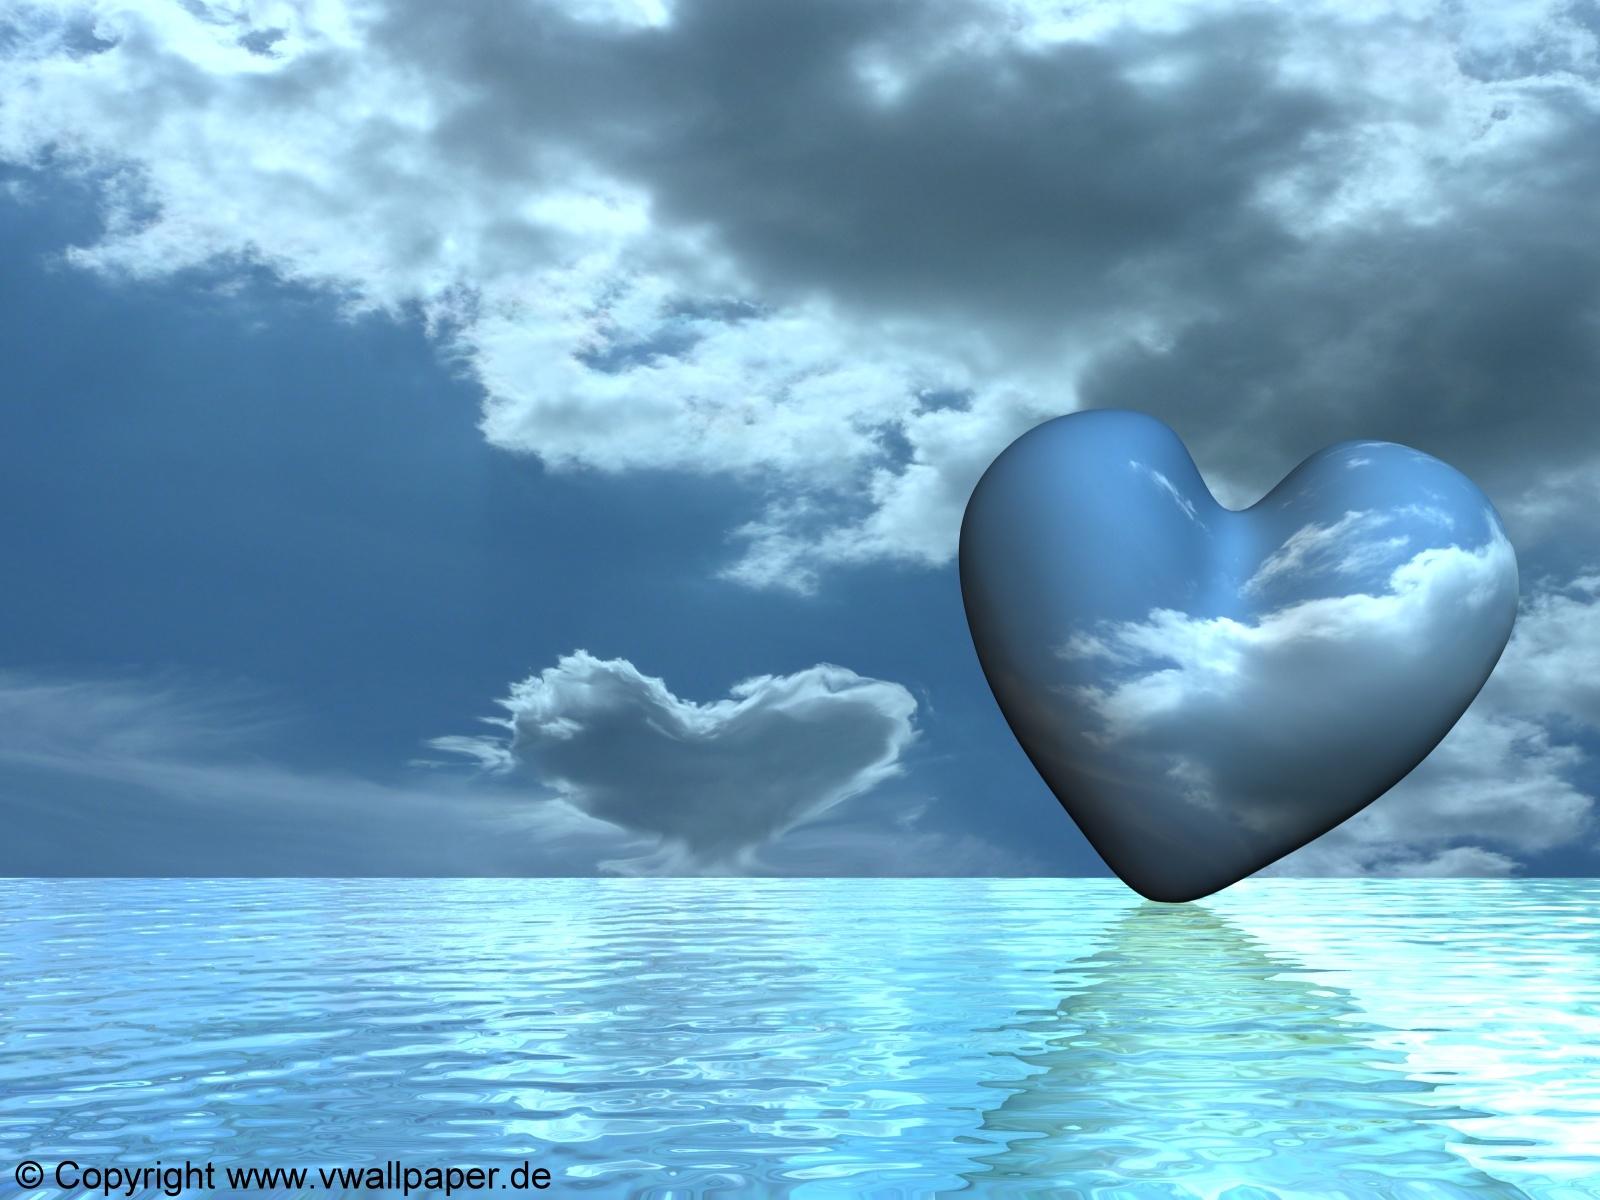 Океан и про любовь. Красивое сердце. Сердце на фоне моря. Сердце в природе. В сердце моря.